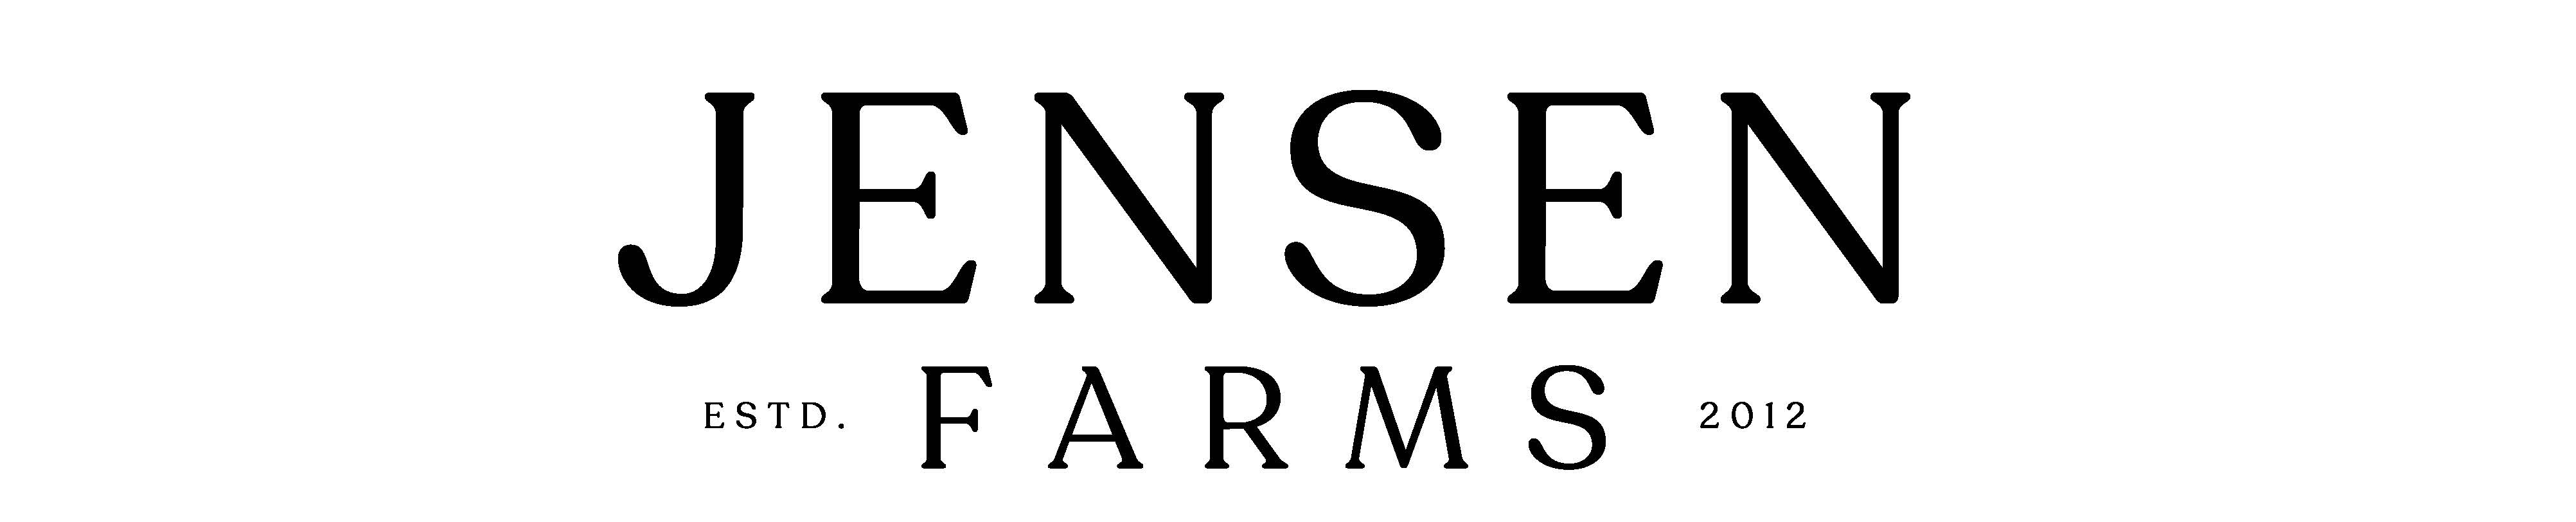 Jensen Farms (Primary Logo) Black